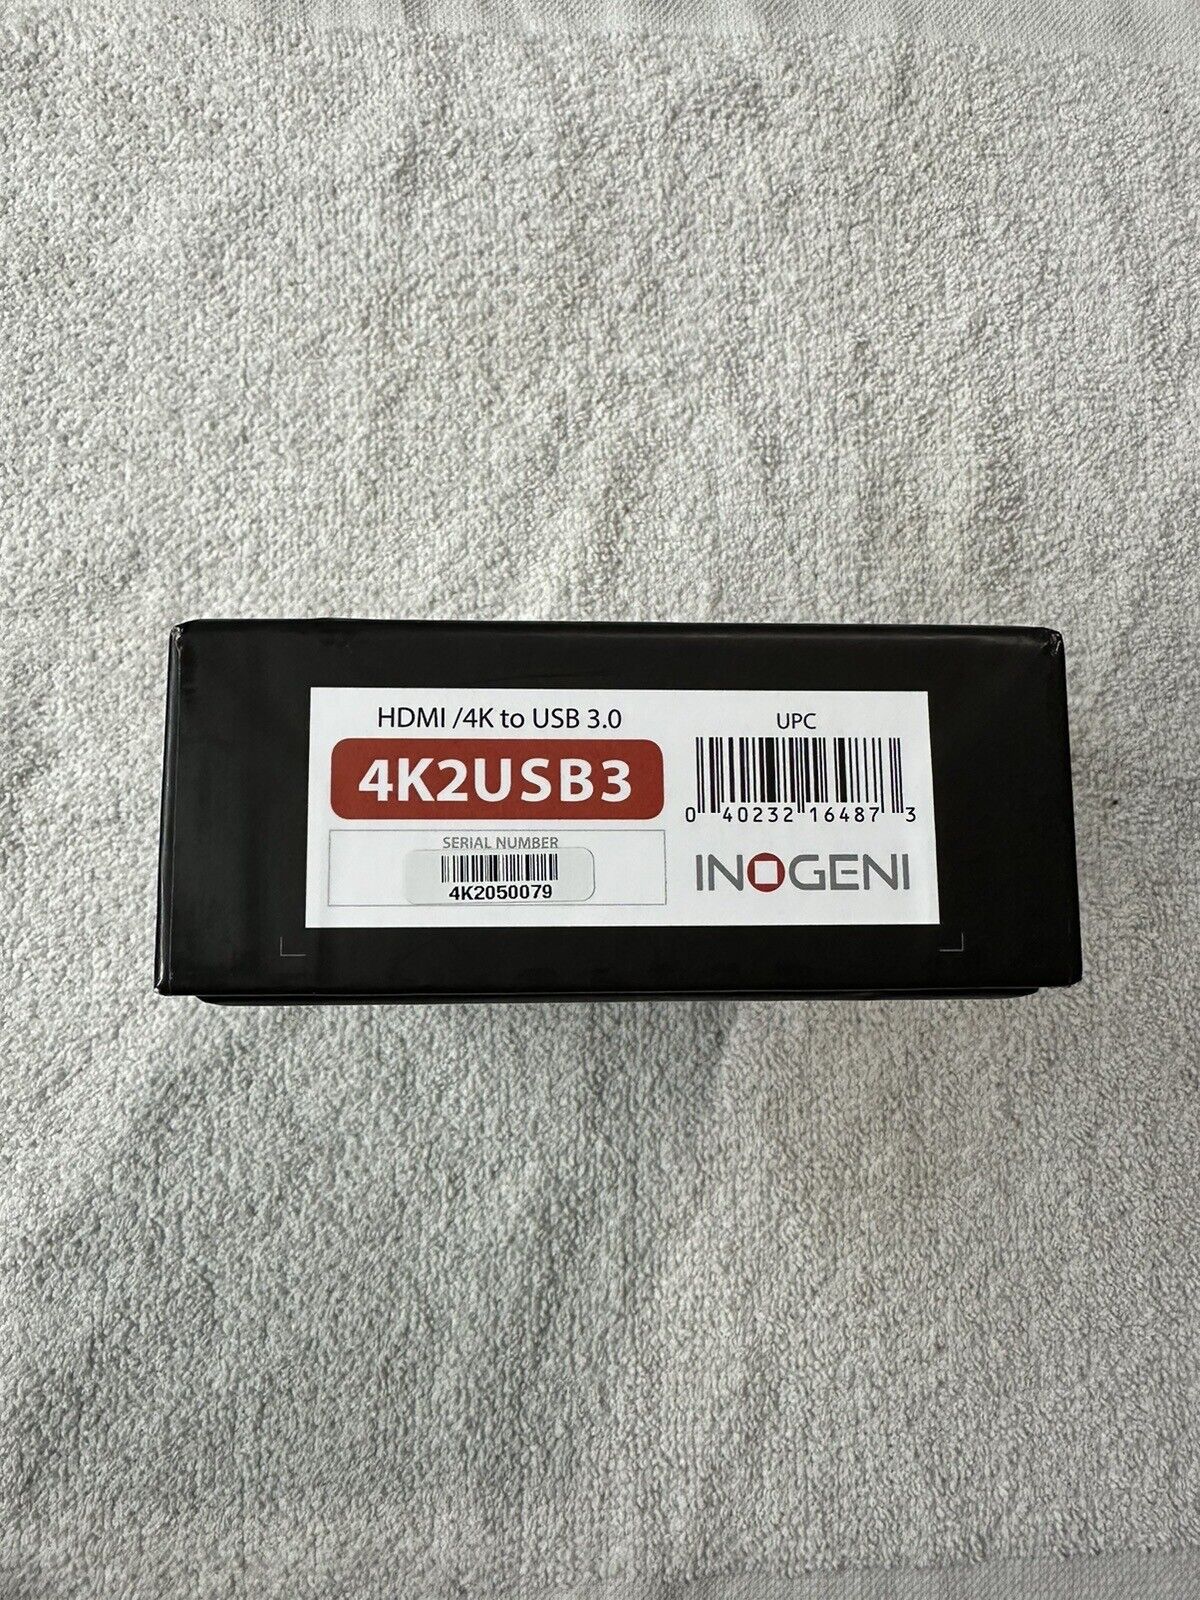 NEW- INOGENI 4K2USB3 HDMI 4K to USB 3.0 Open Box